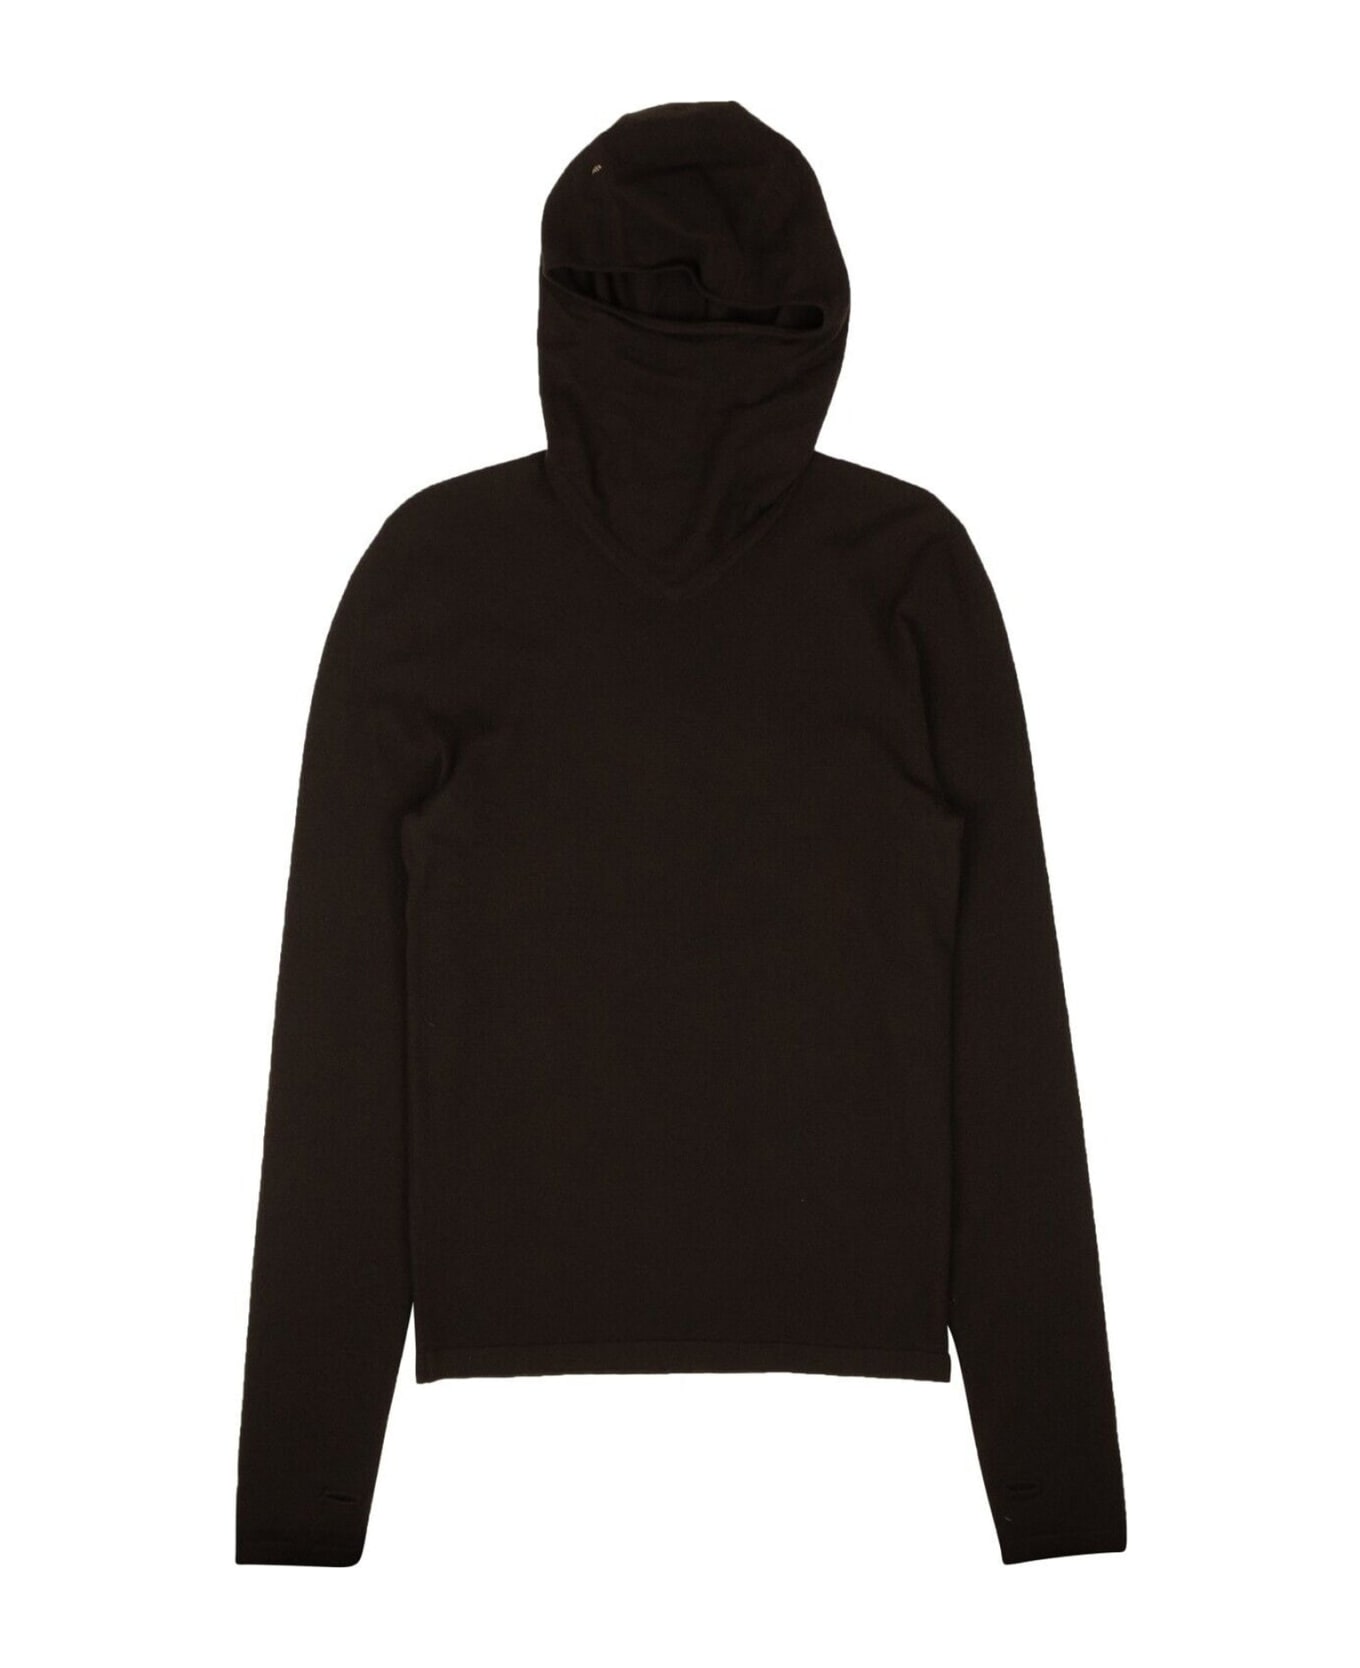 Bottega Veneta Cashmere Sweater - Black